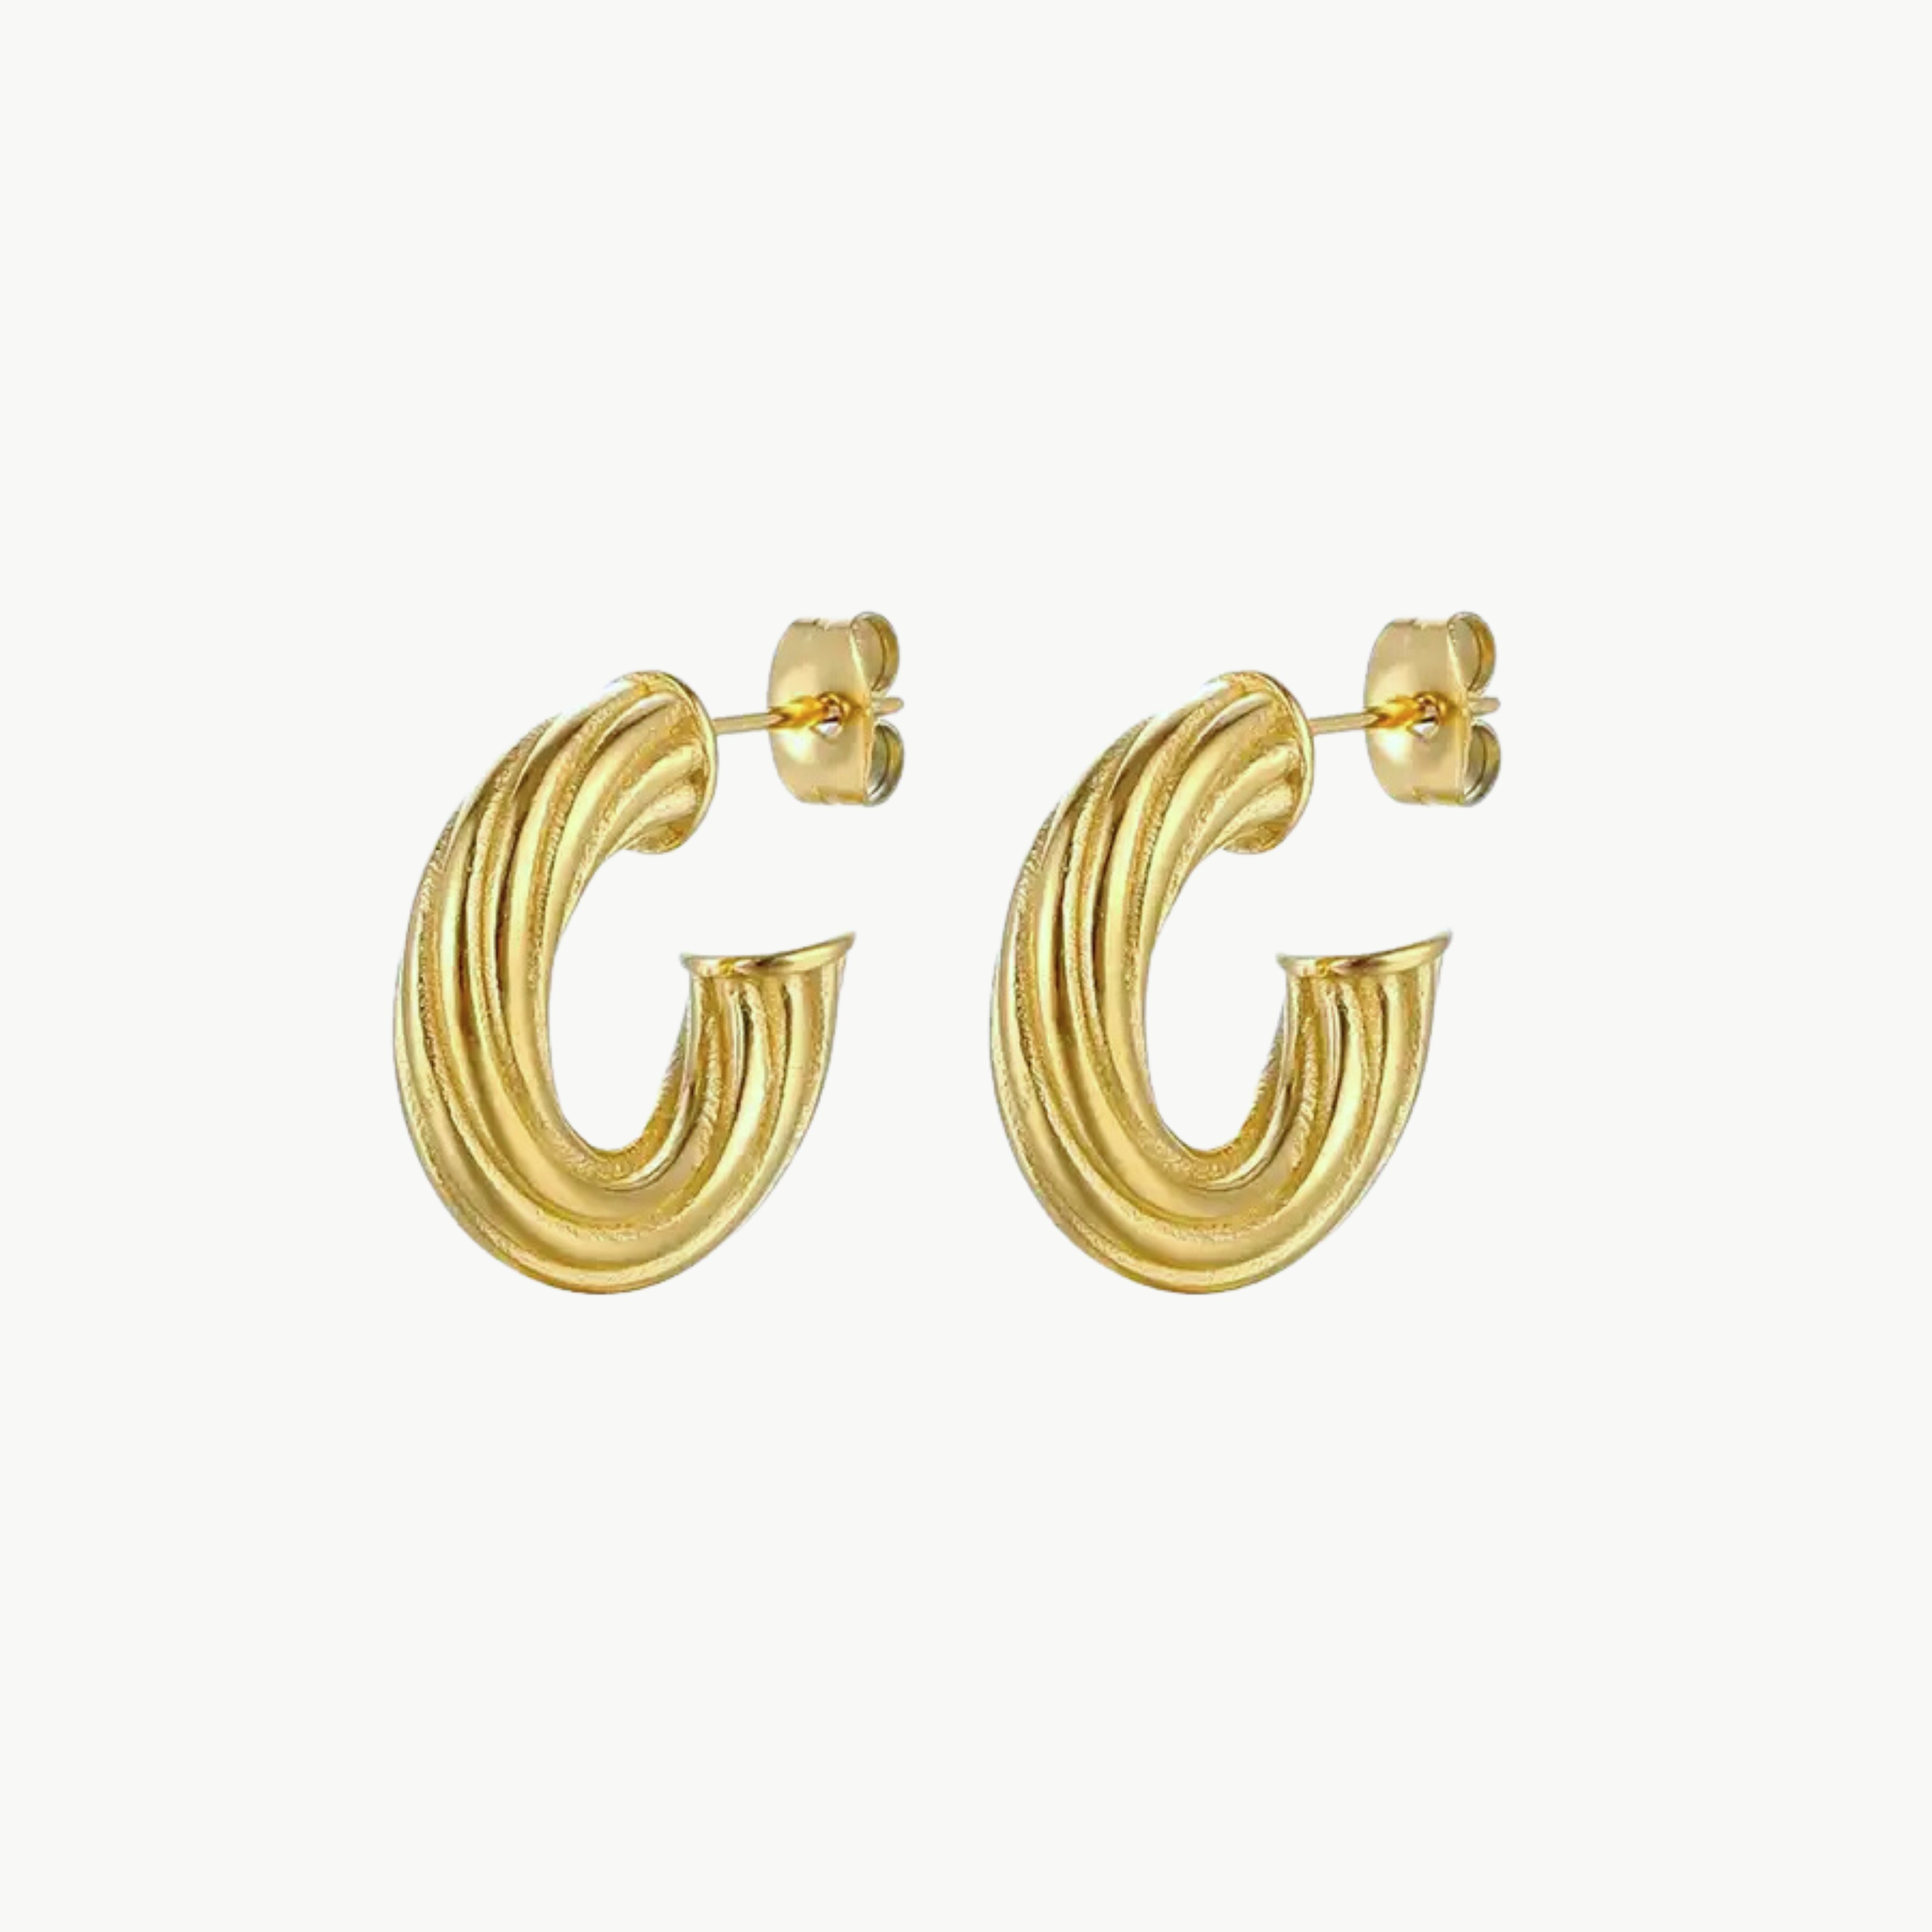 Golden stainless steel statement hoop earrings women jewelry elvie the label